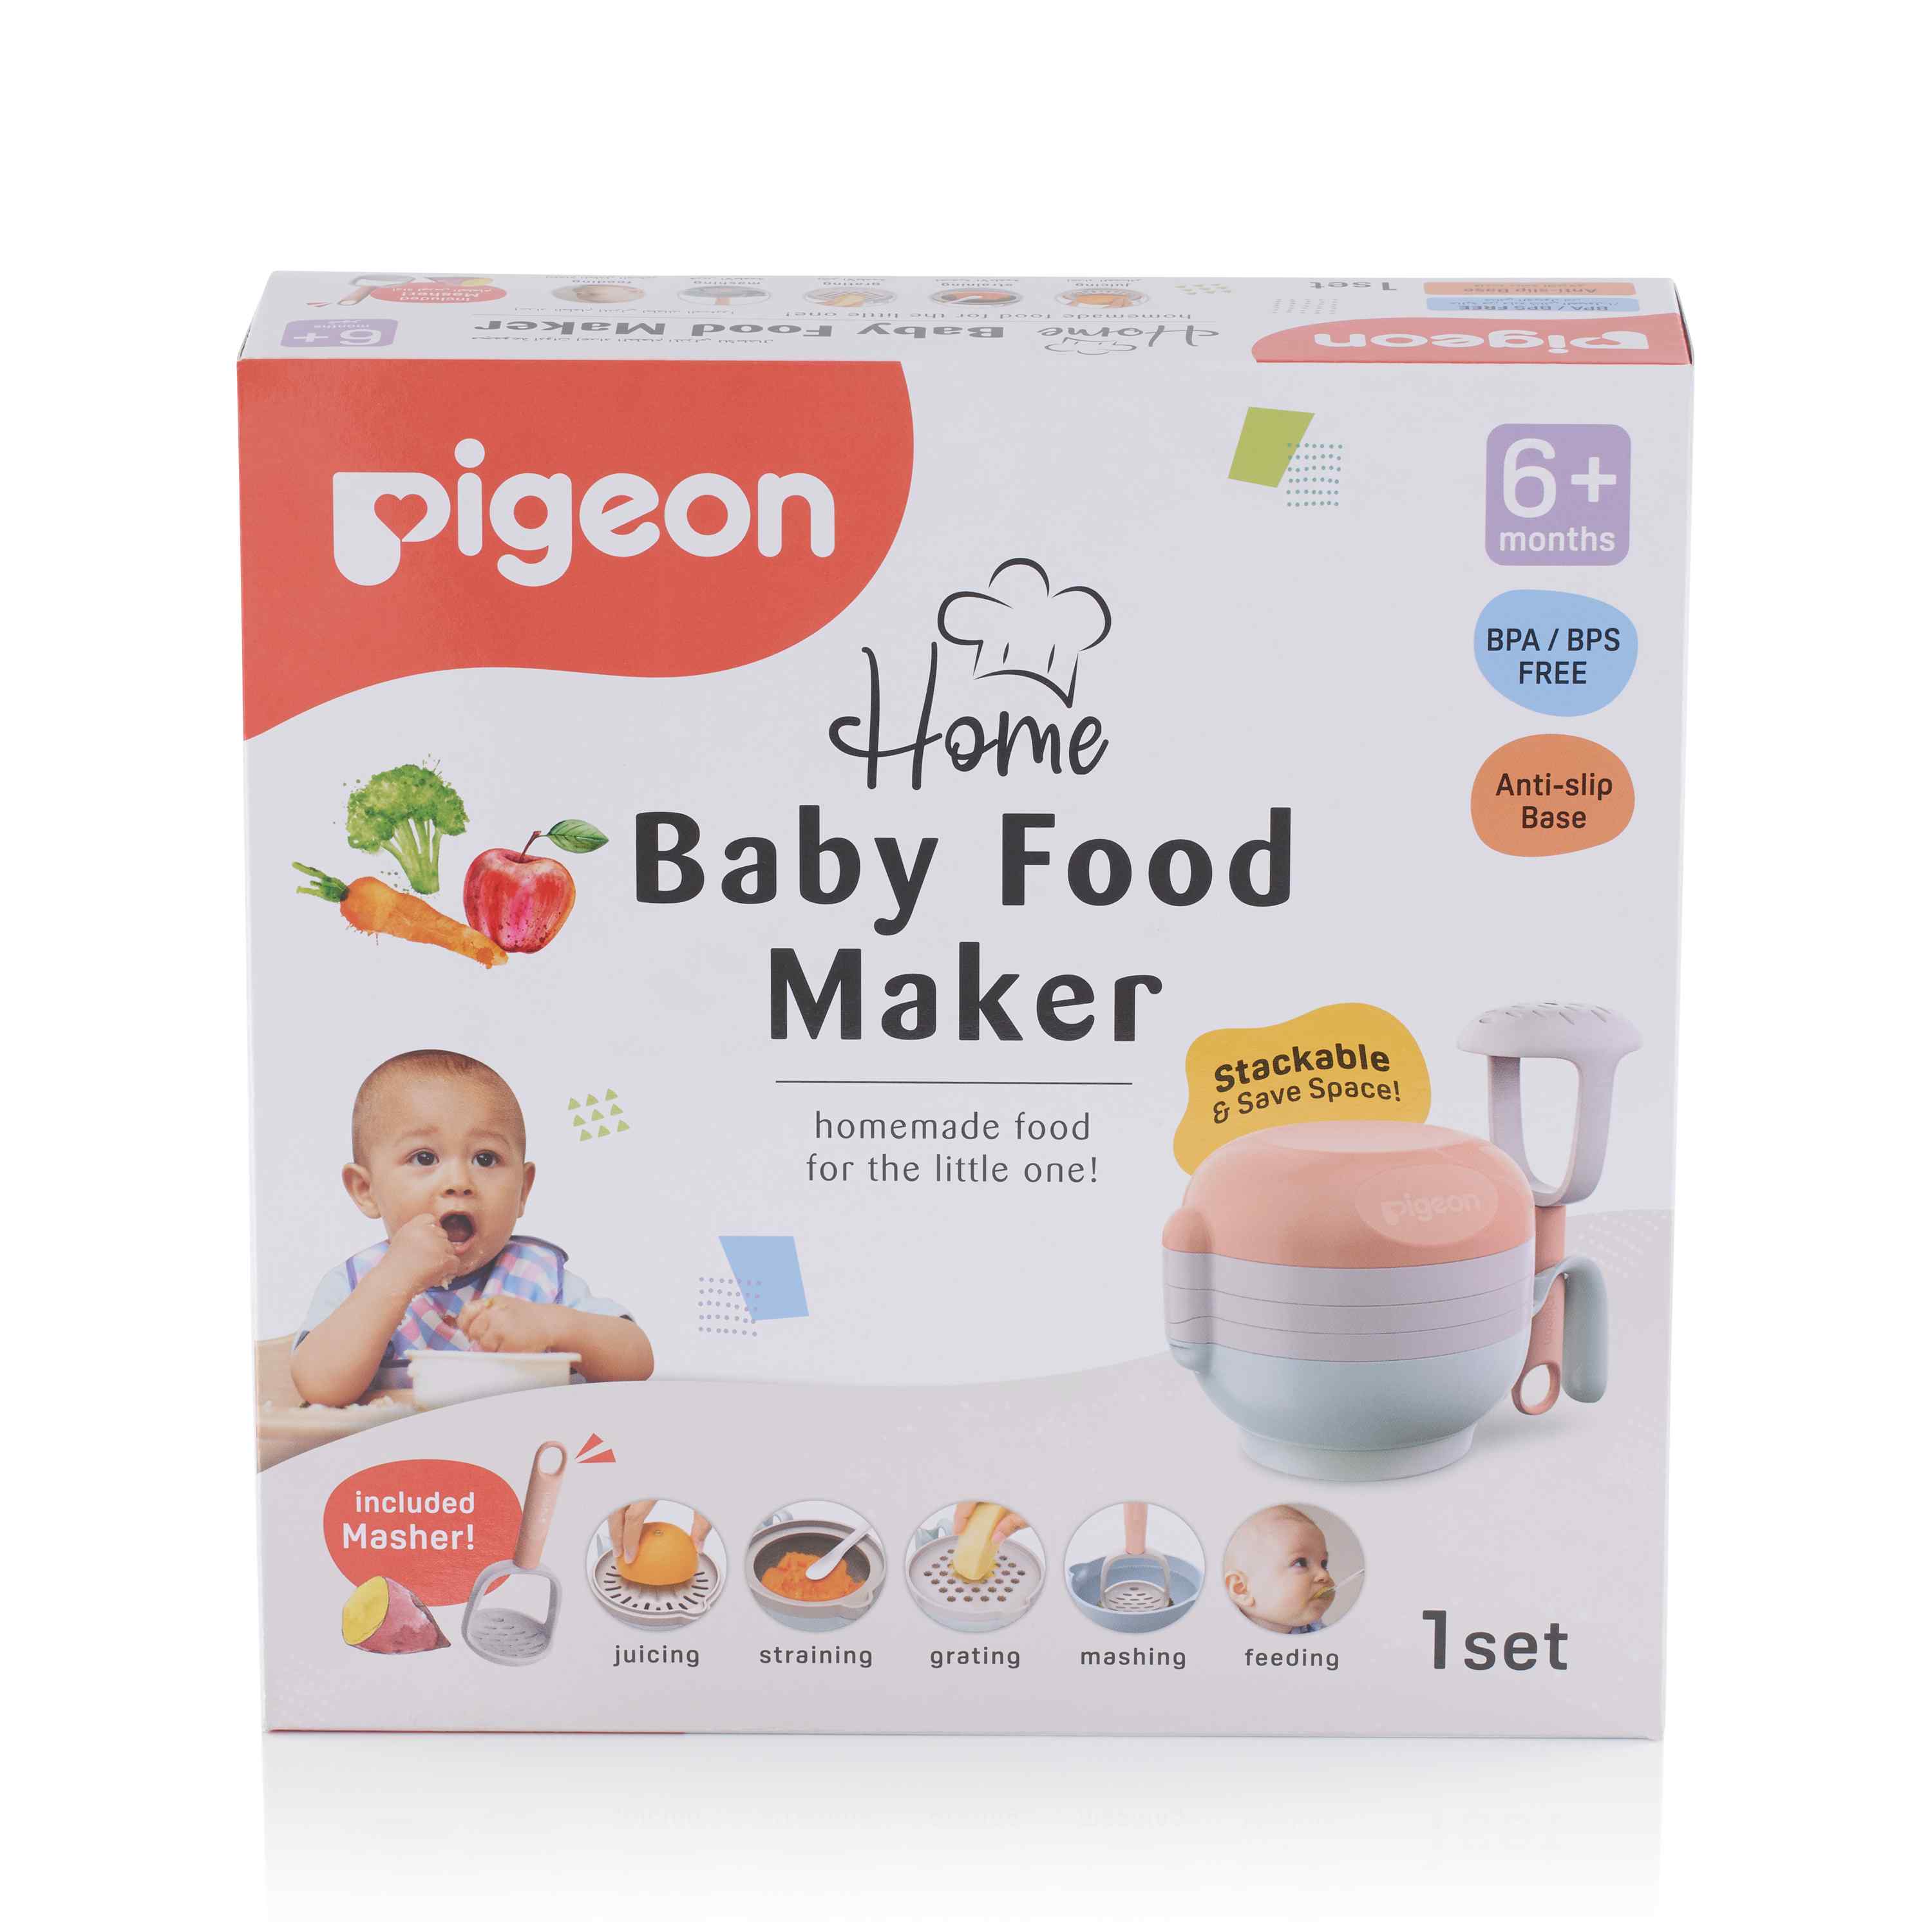 Pigeon (D326) Home Baby Food Maker (PG-78416)